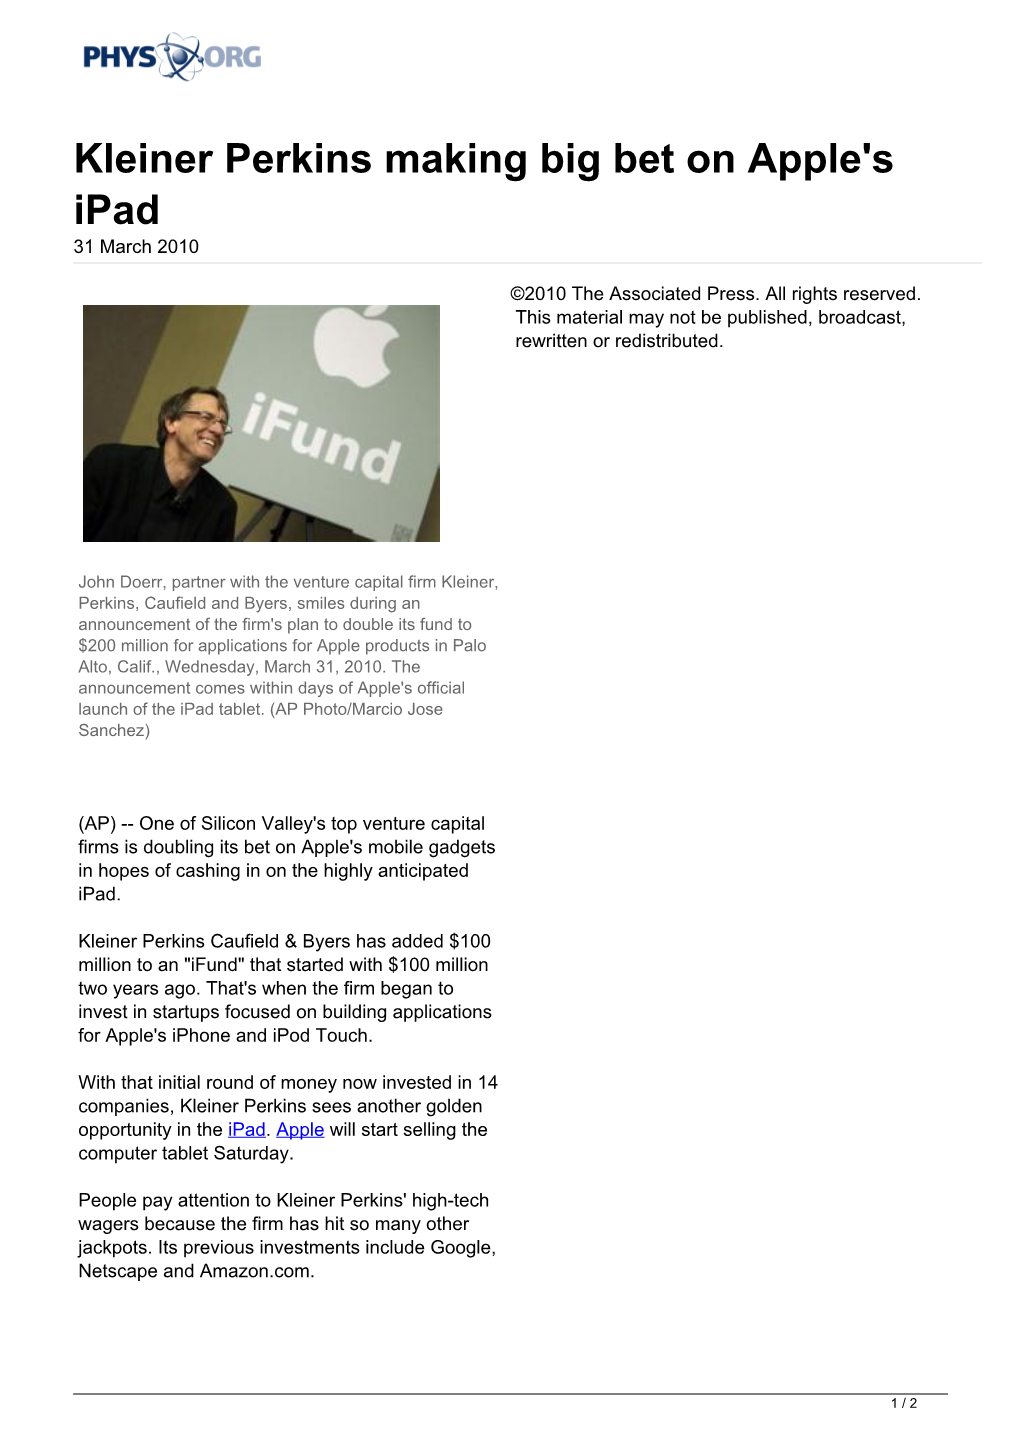 Kleiner Perkins Making Big Bet on Apple's Ipad 31 March 2010